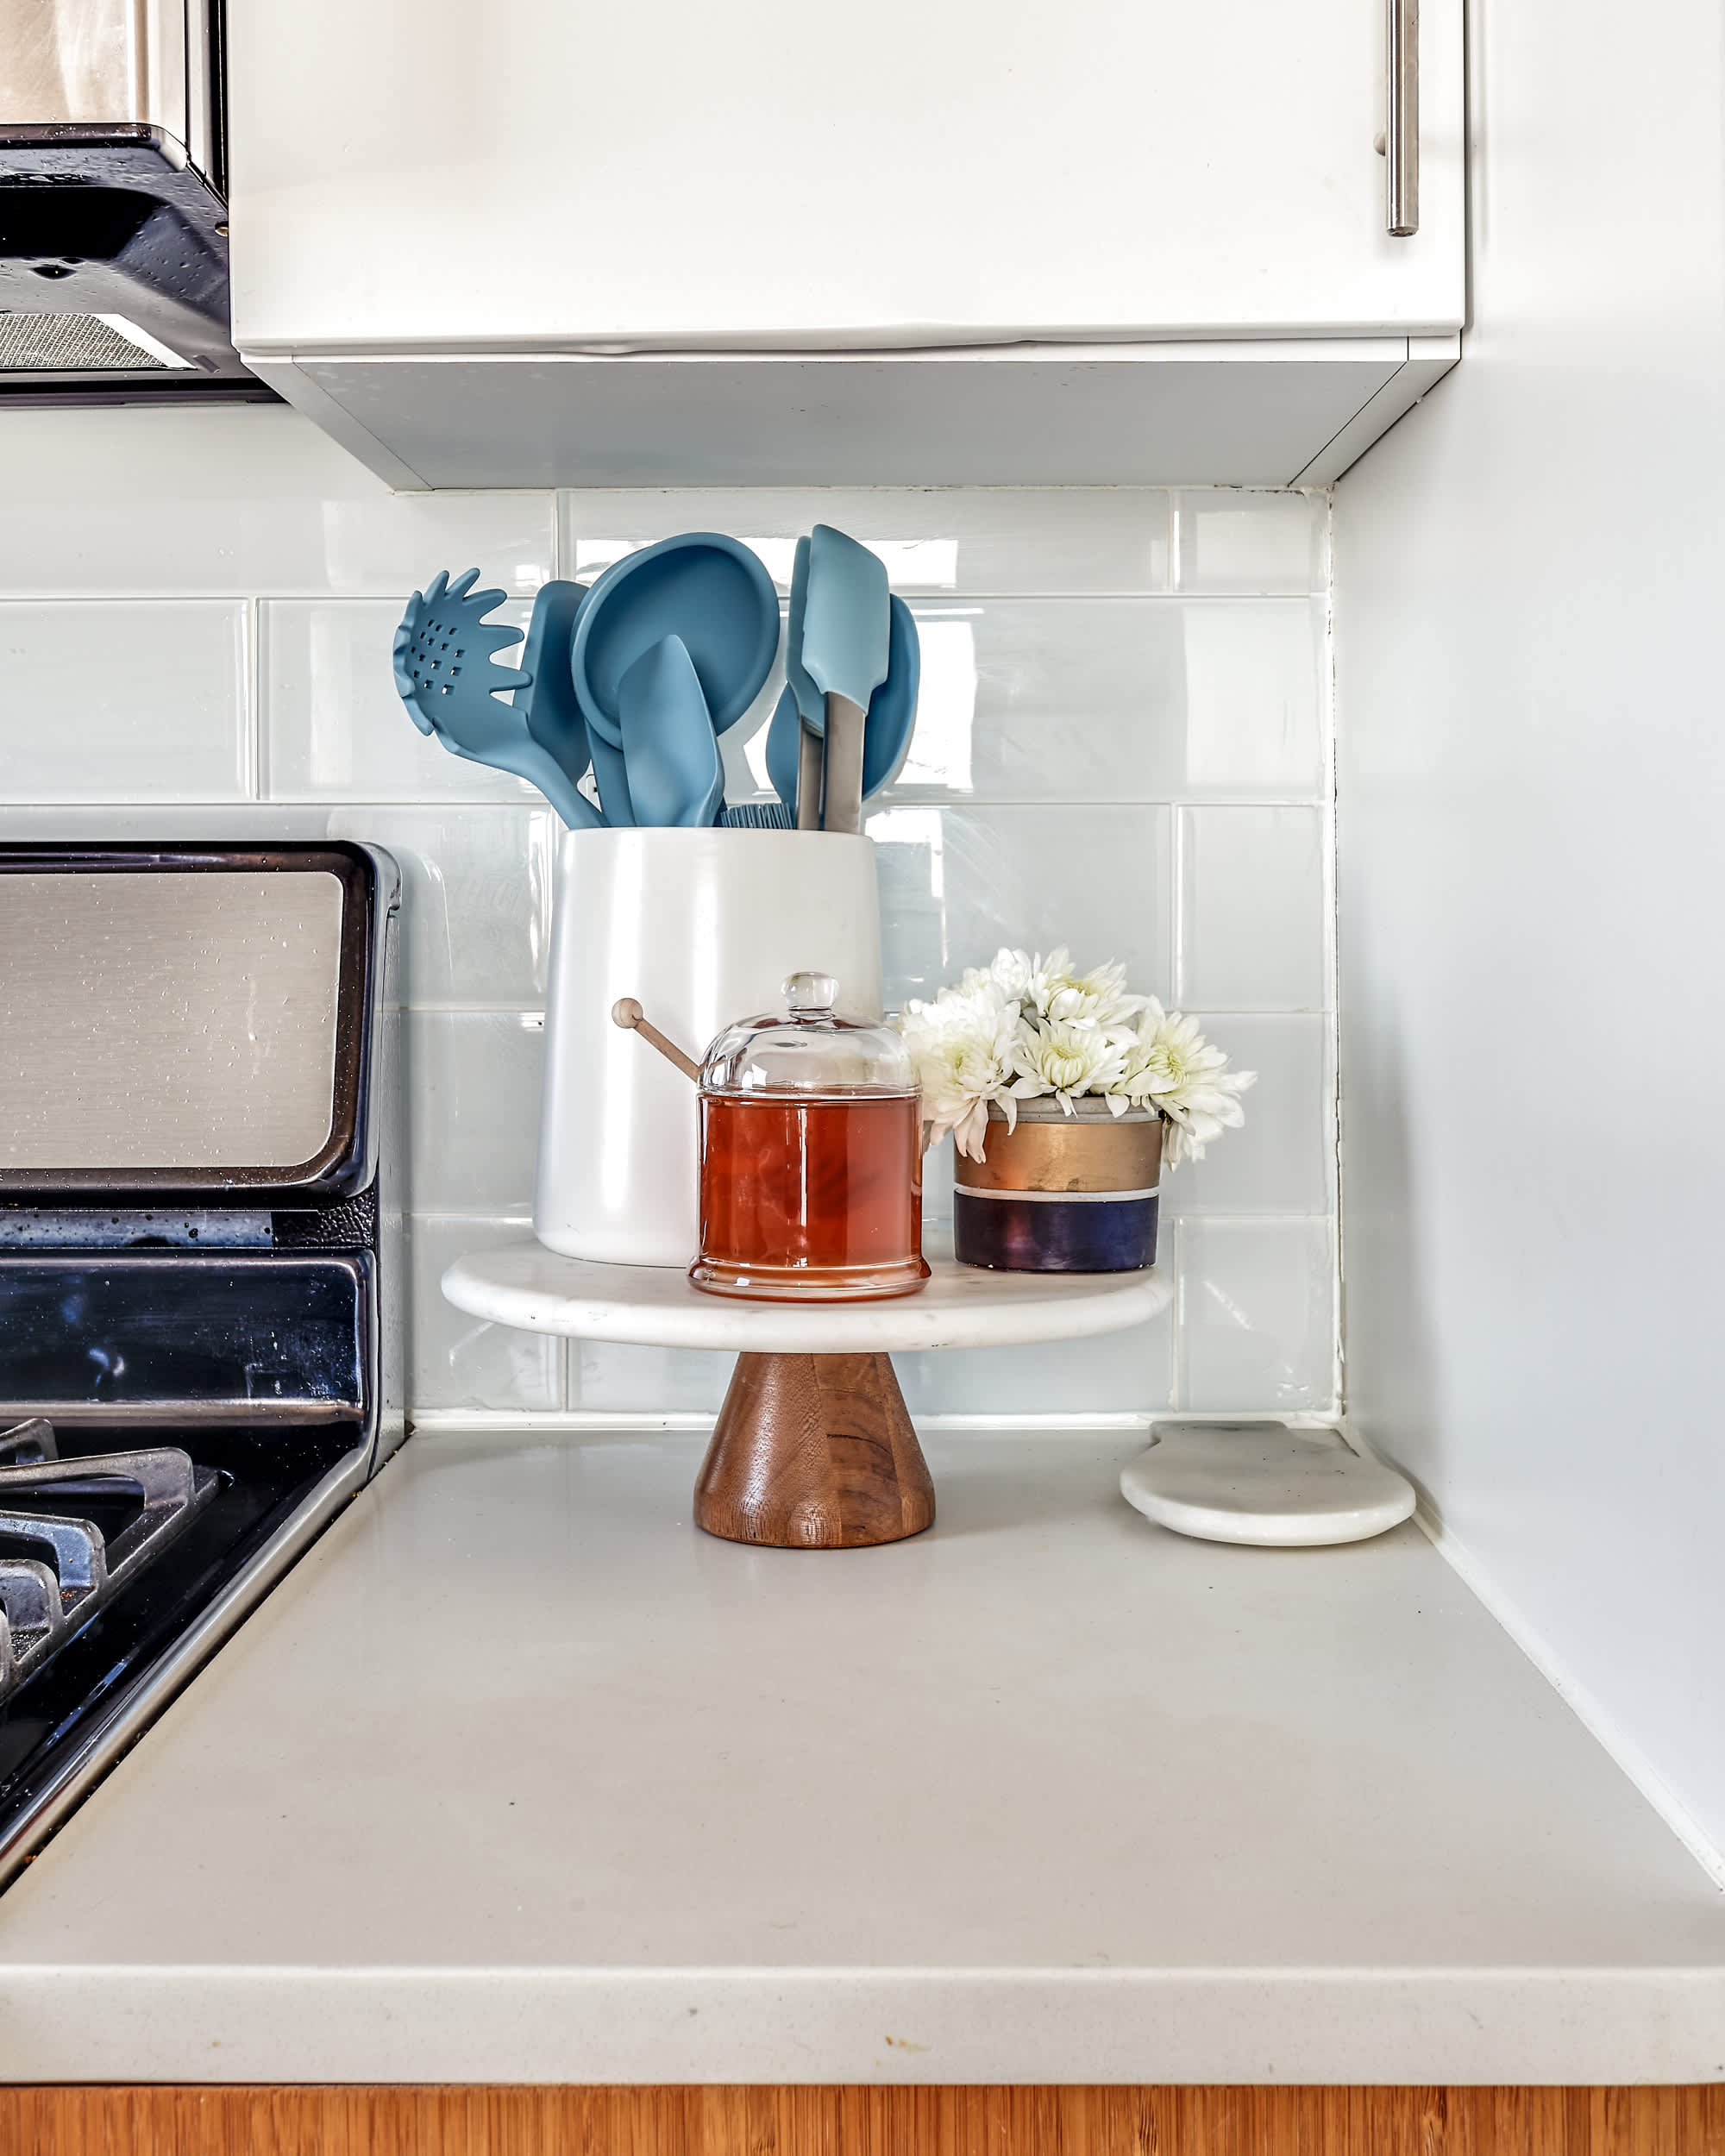 22 Brilliant Kitchen Storage Ideas to Control Your Clutter